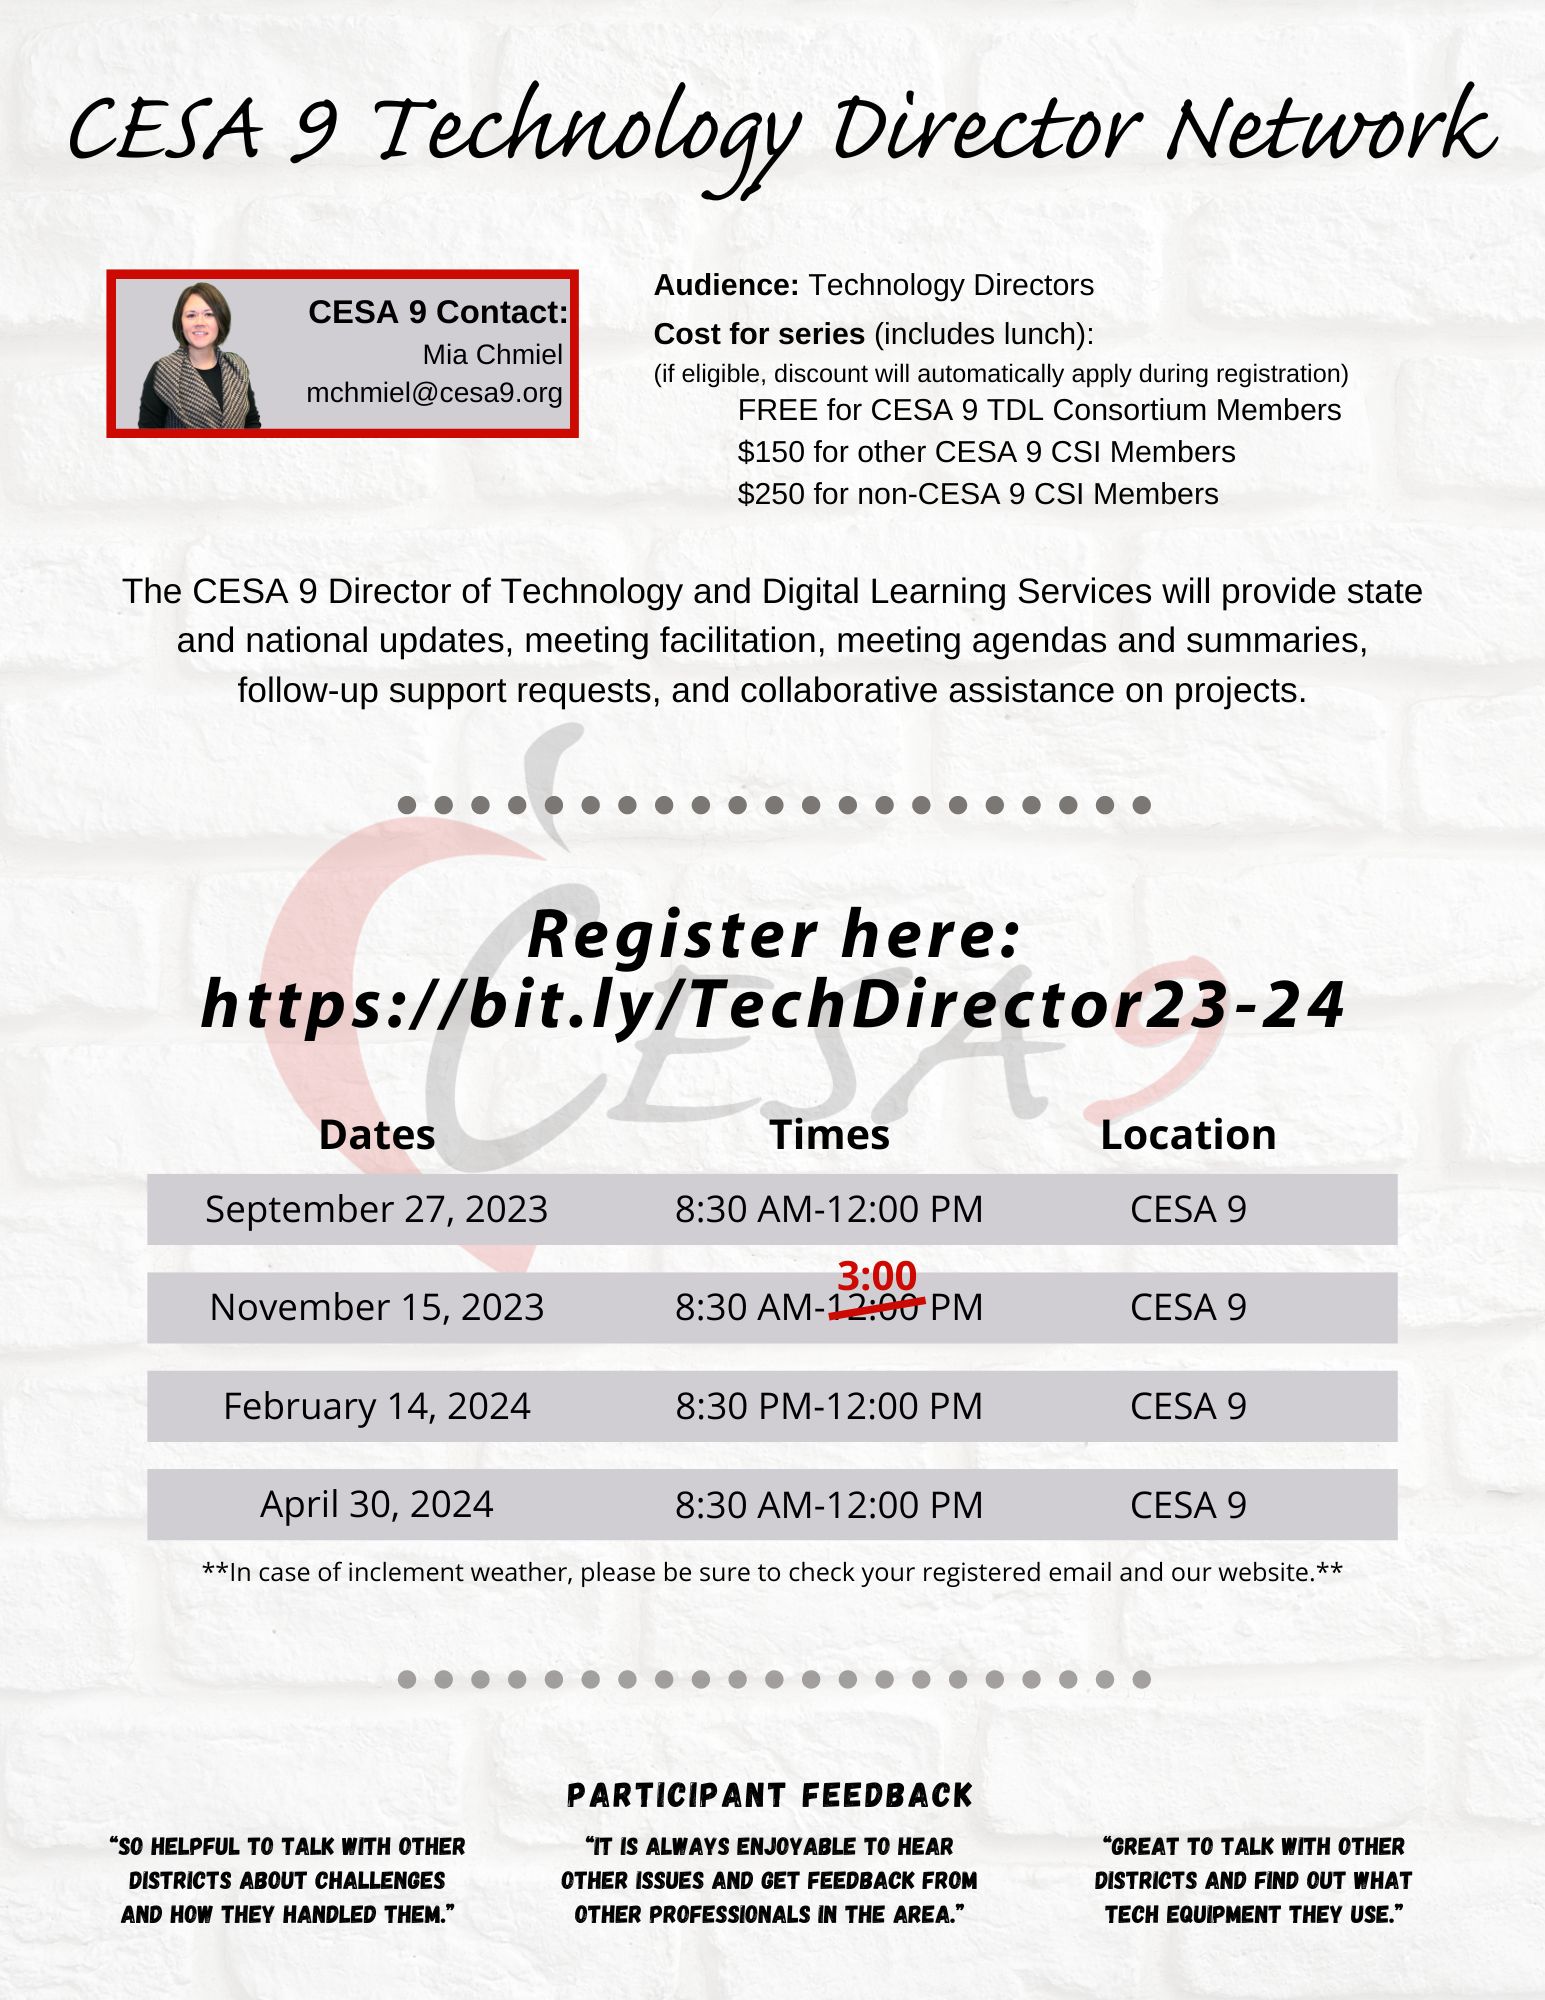 CESA 9 Technology Director Network flyer image